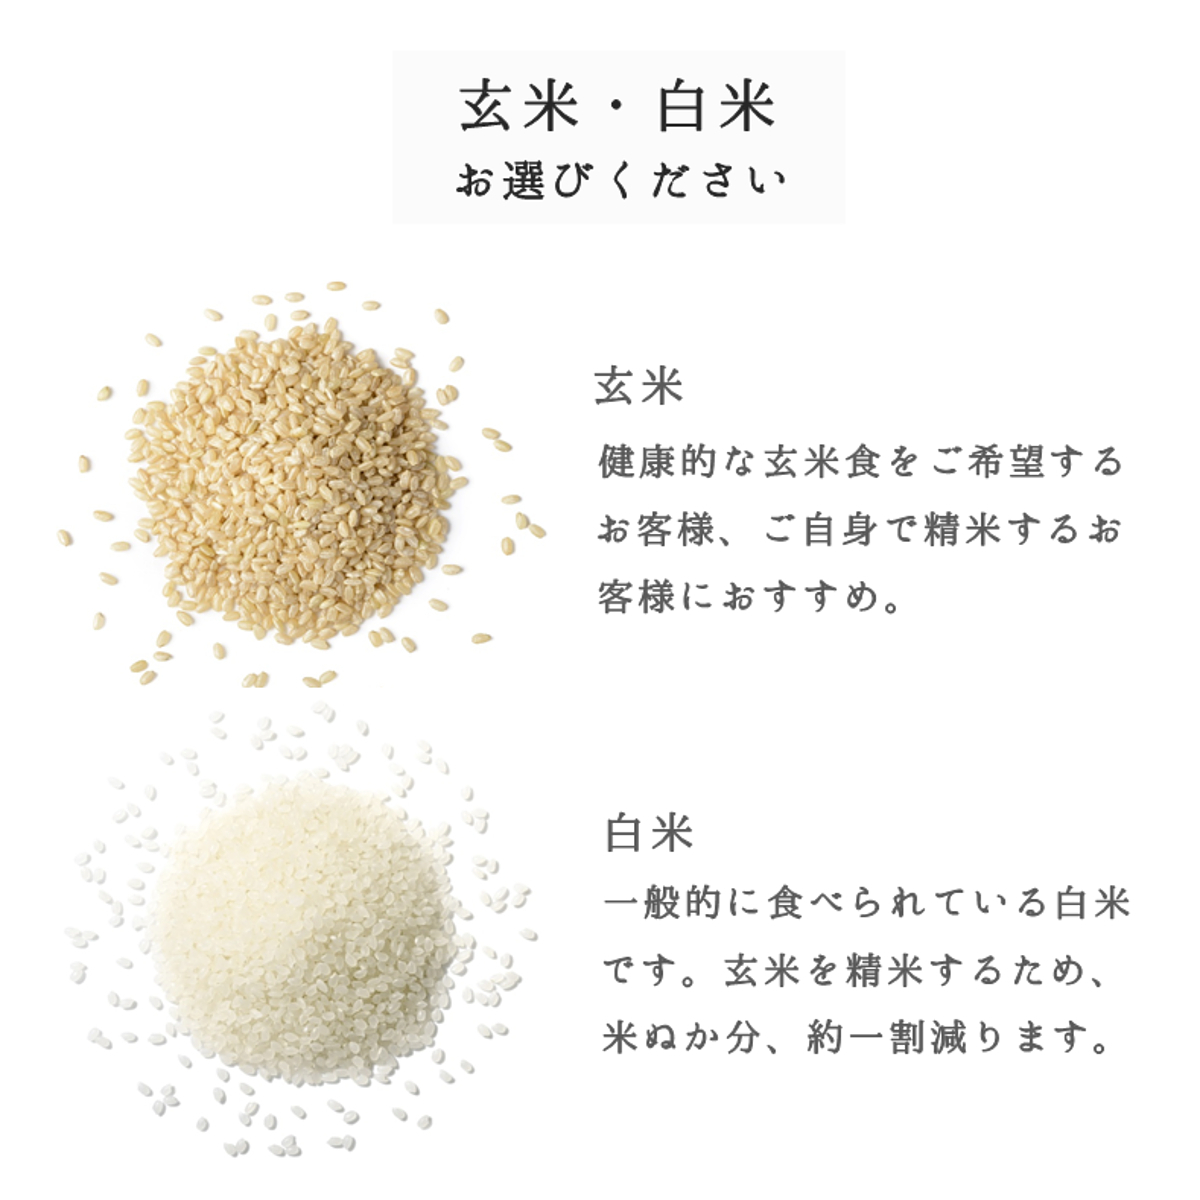  Koshihikari 20kg Yamagata prefecture production free shipping brown rice white rice . rice free new rice . peace 5 year production one etc. rice rice . rice 30kg 10kg. on sale 